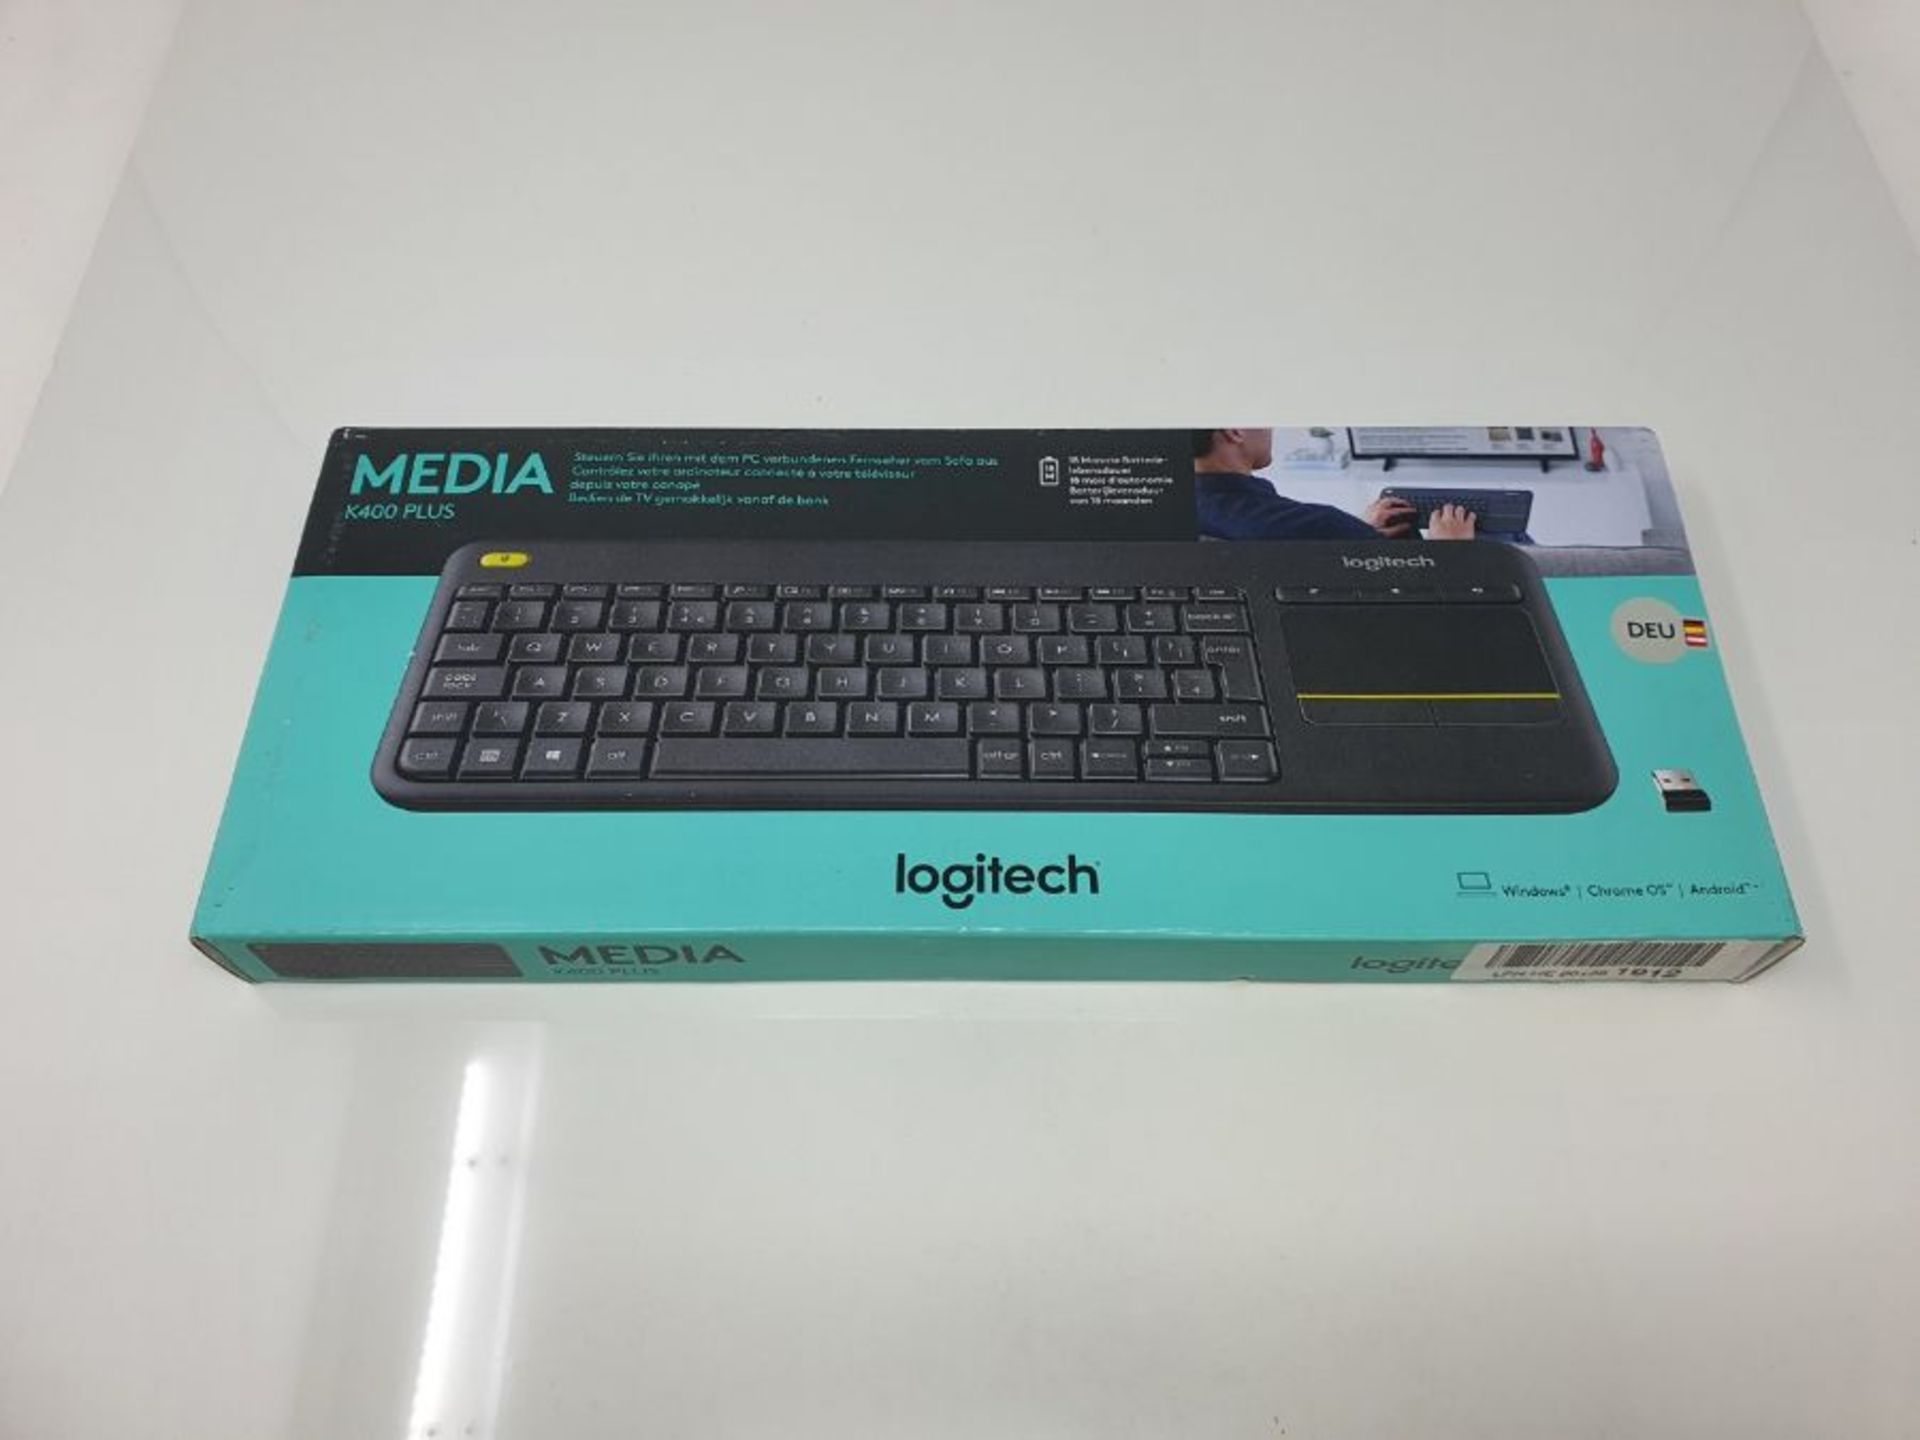 Logitech K400 Plus Wireless Livingroom Keyboard, QWERTZ German Layout - Black - Image 2 of 3